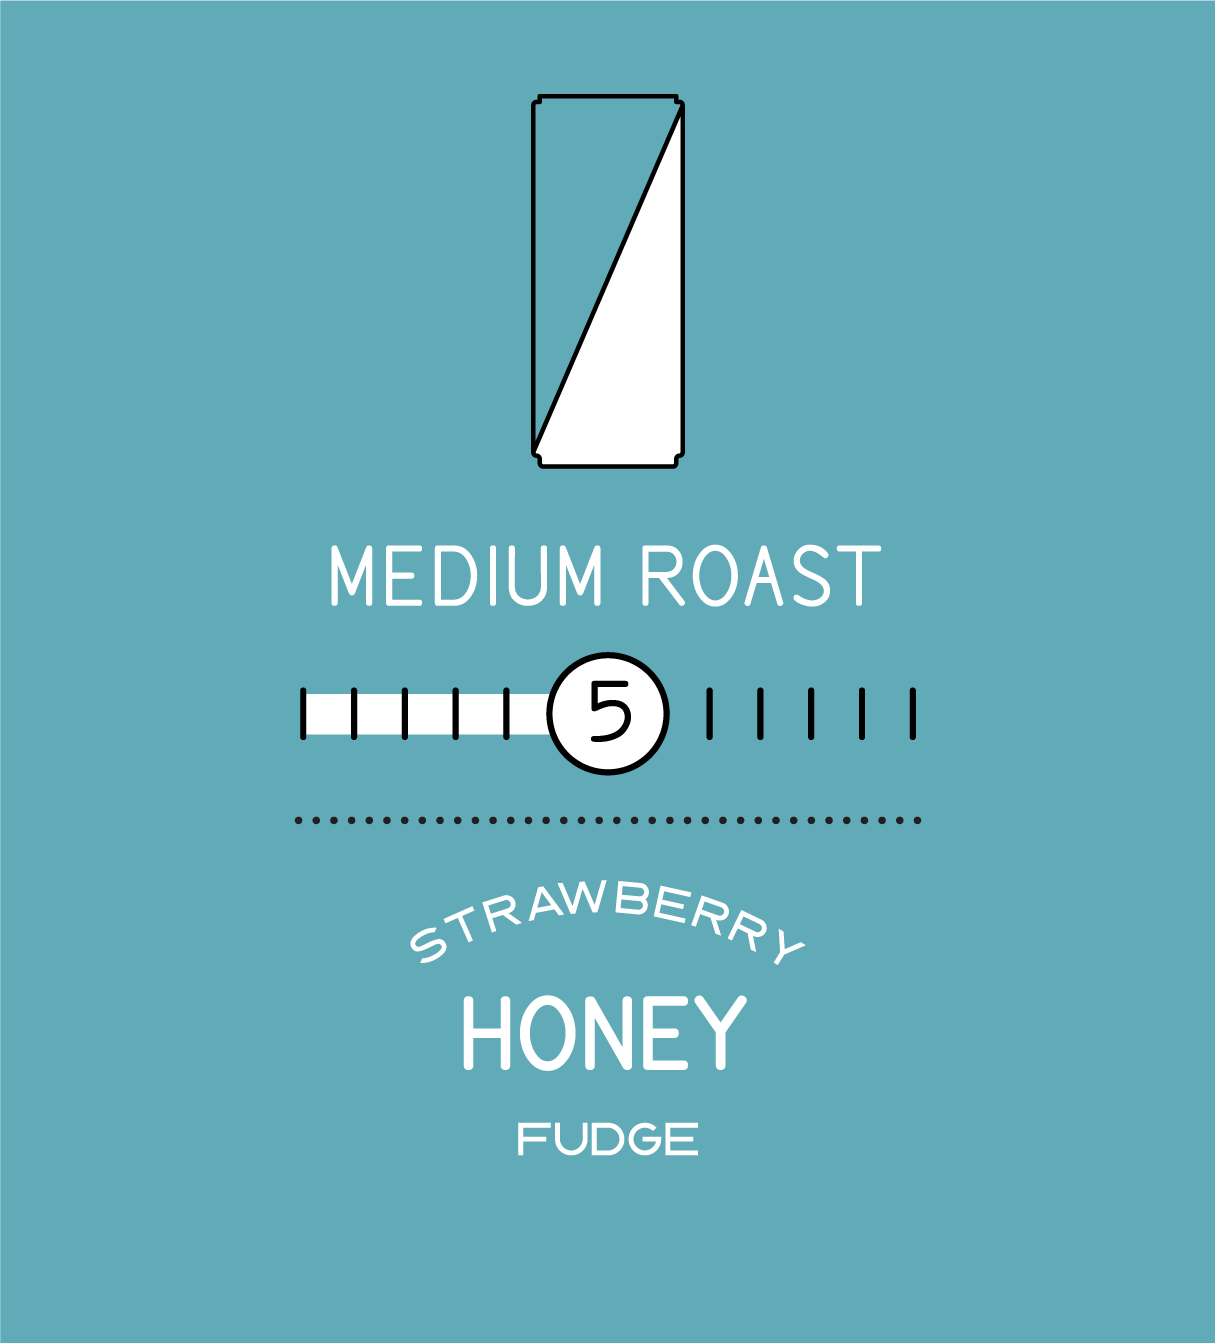 Medium Roast. Roastlevel 5. Strawberry, honey and fudge. 